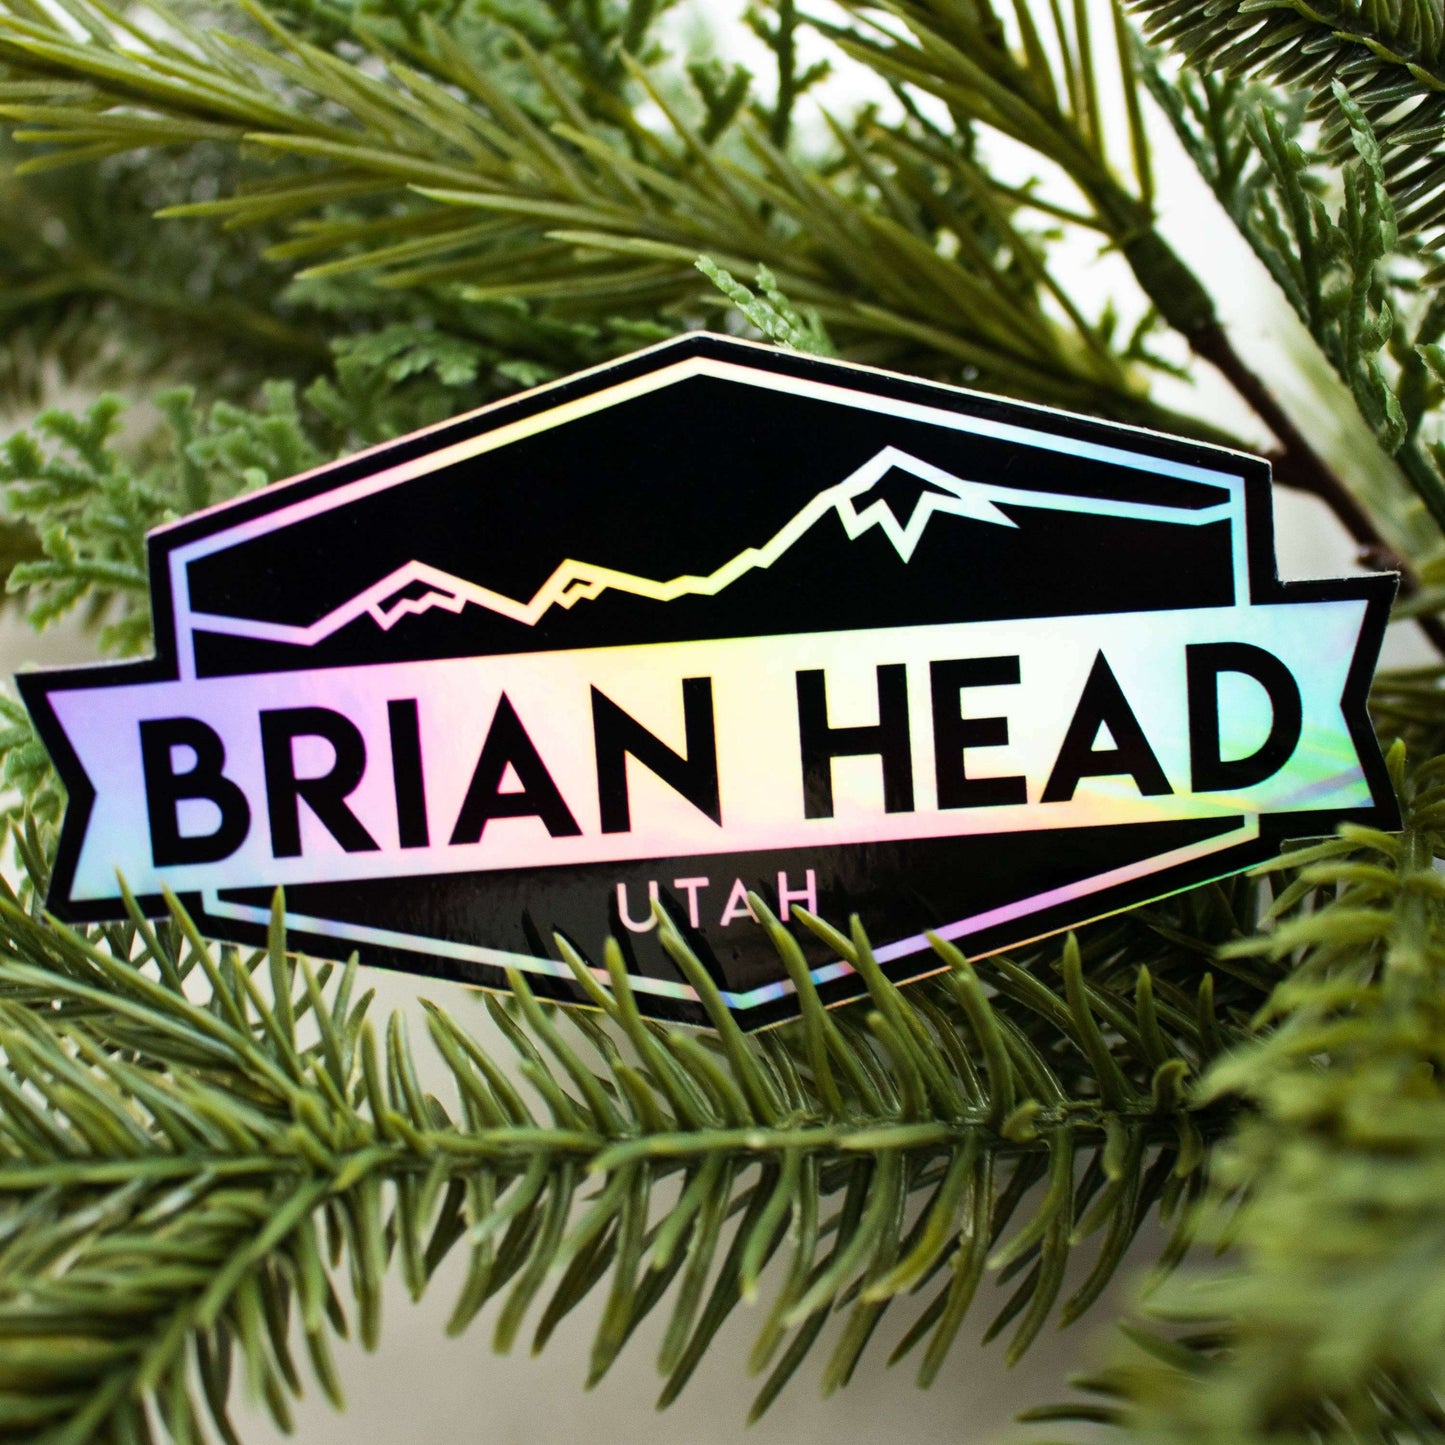 Brian Head Utah Holographic Sticker - Dixie Hike & Style